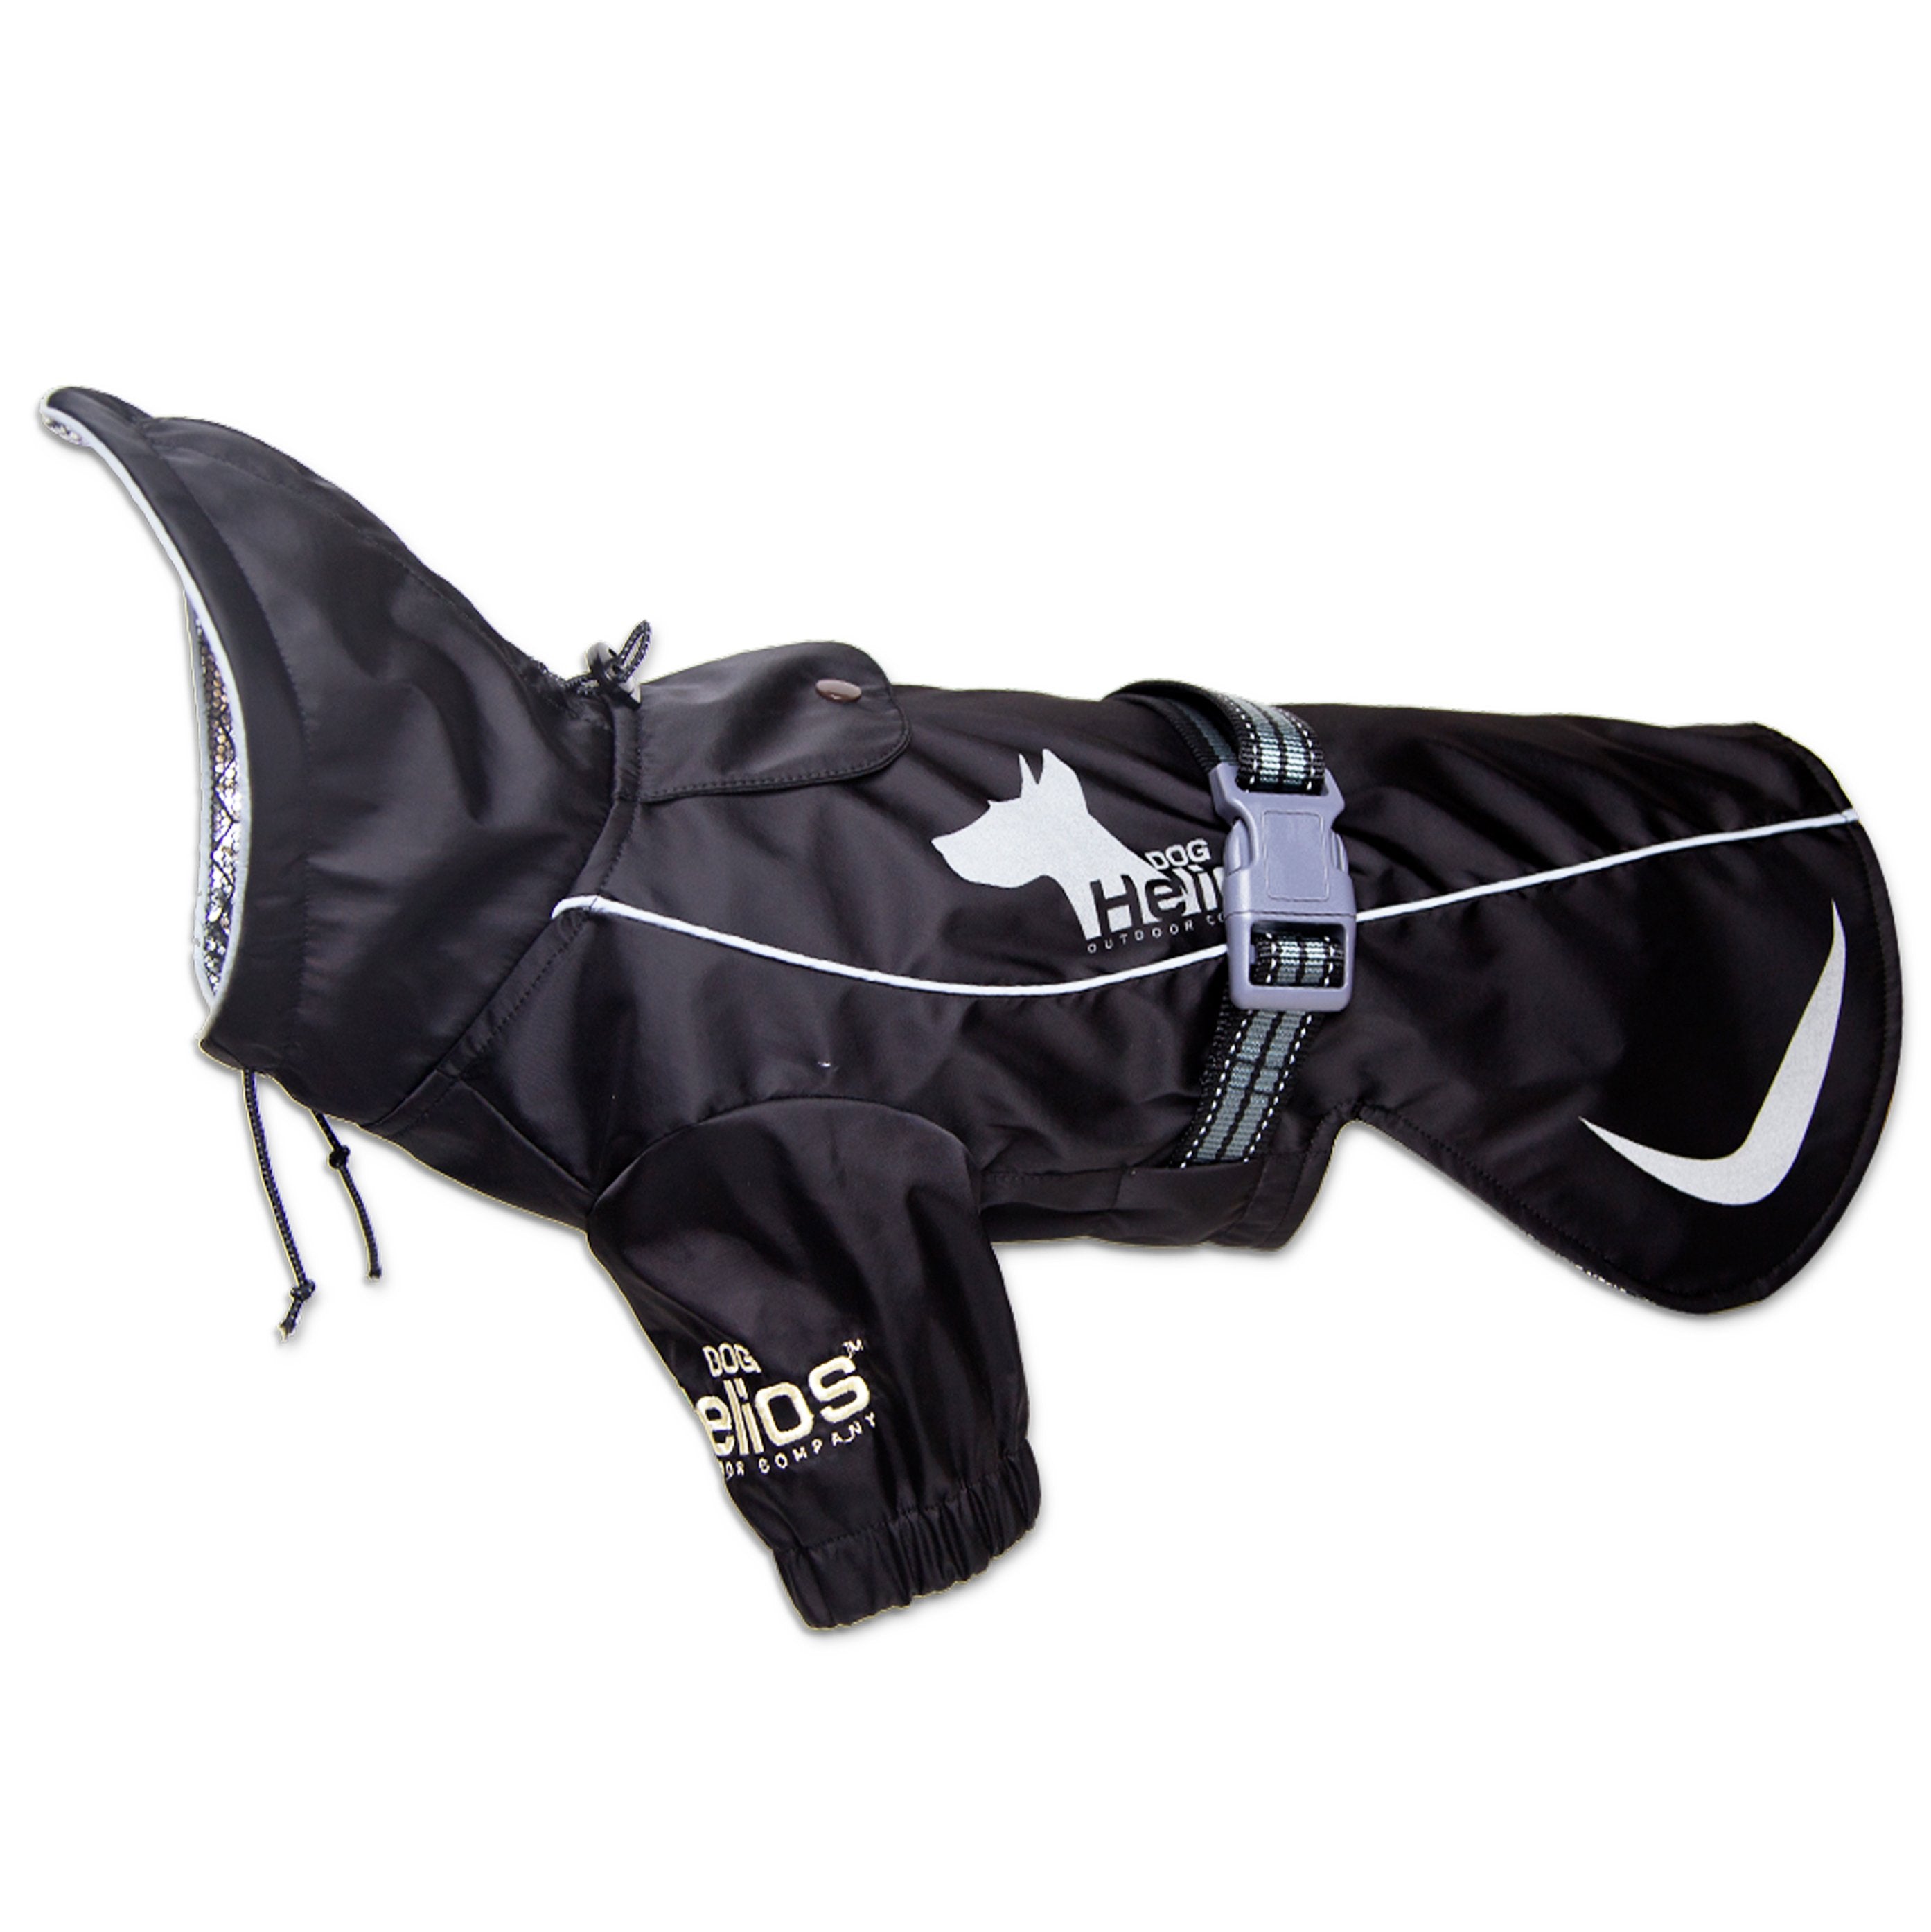 Dog Helios® 'Ice-Breaker' Hooded Dog Coat W/ Heat Reflective Tech - Black - Small